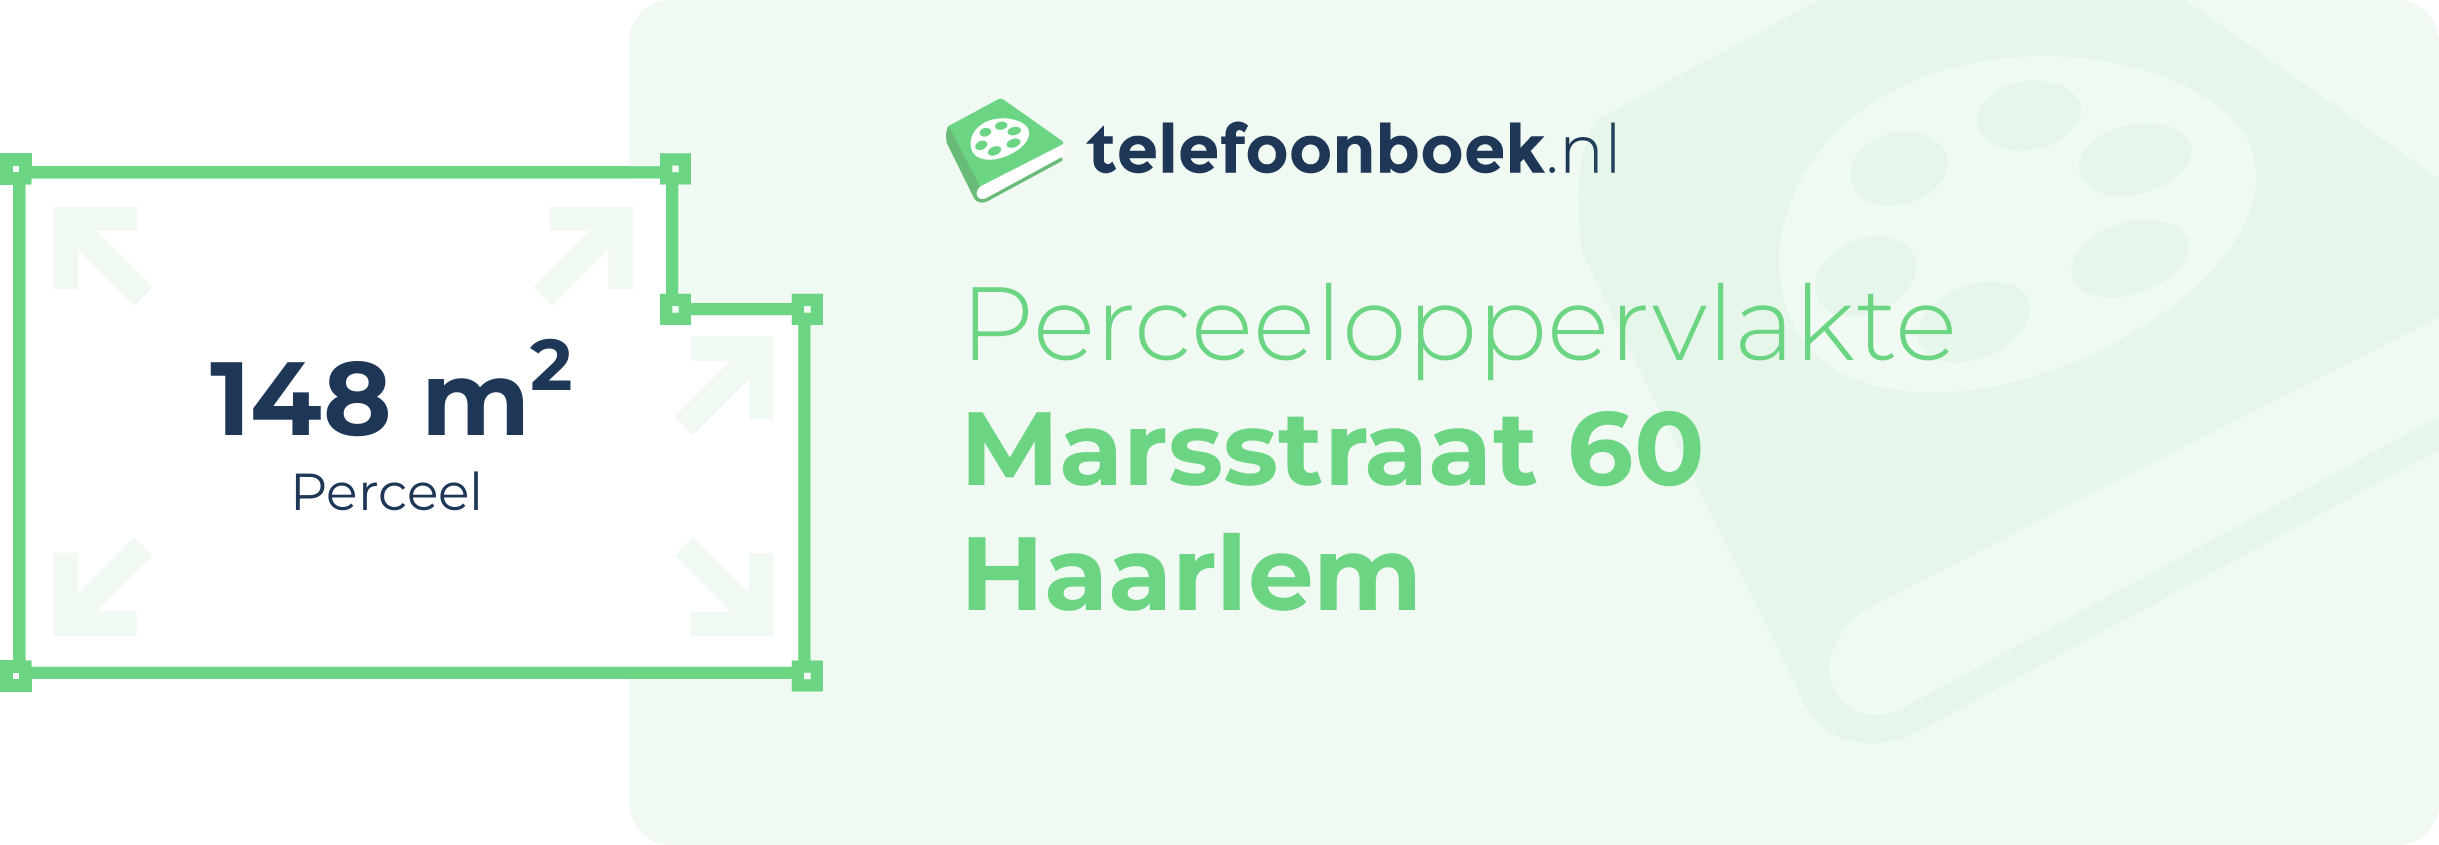 Perceeloppervlakte Marsstraat 60 Haarlem